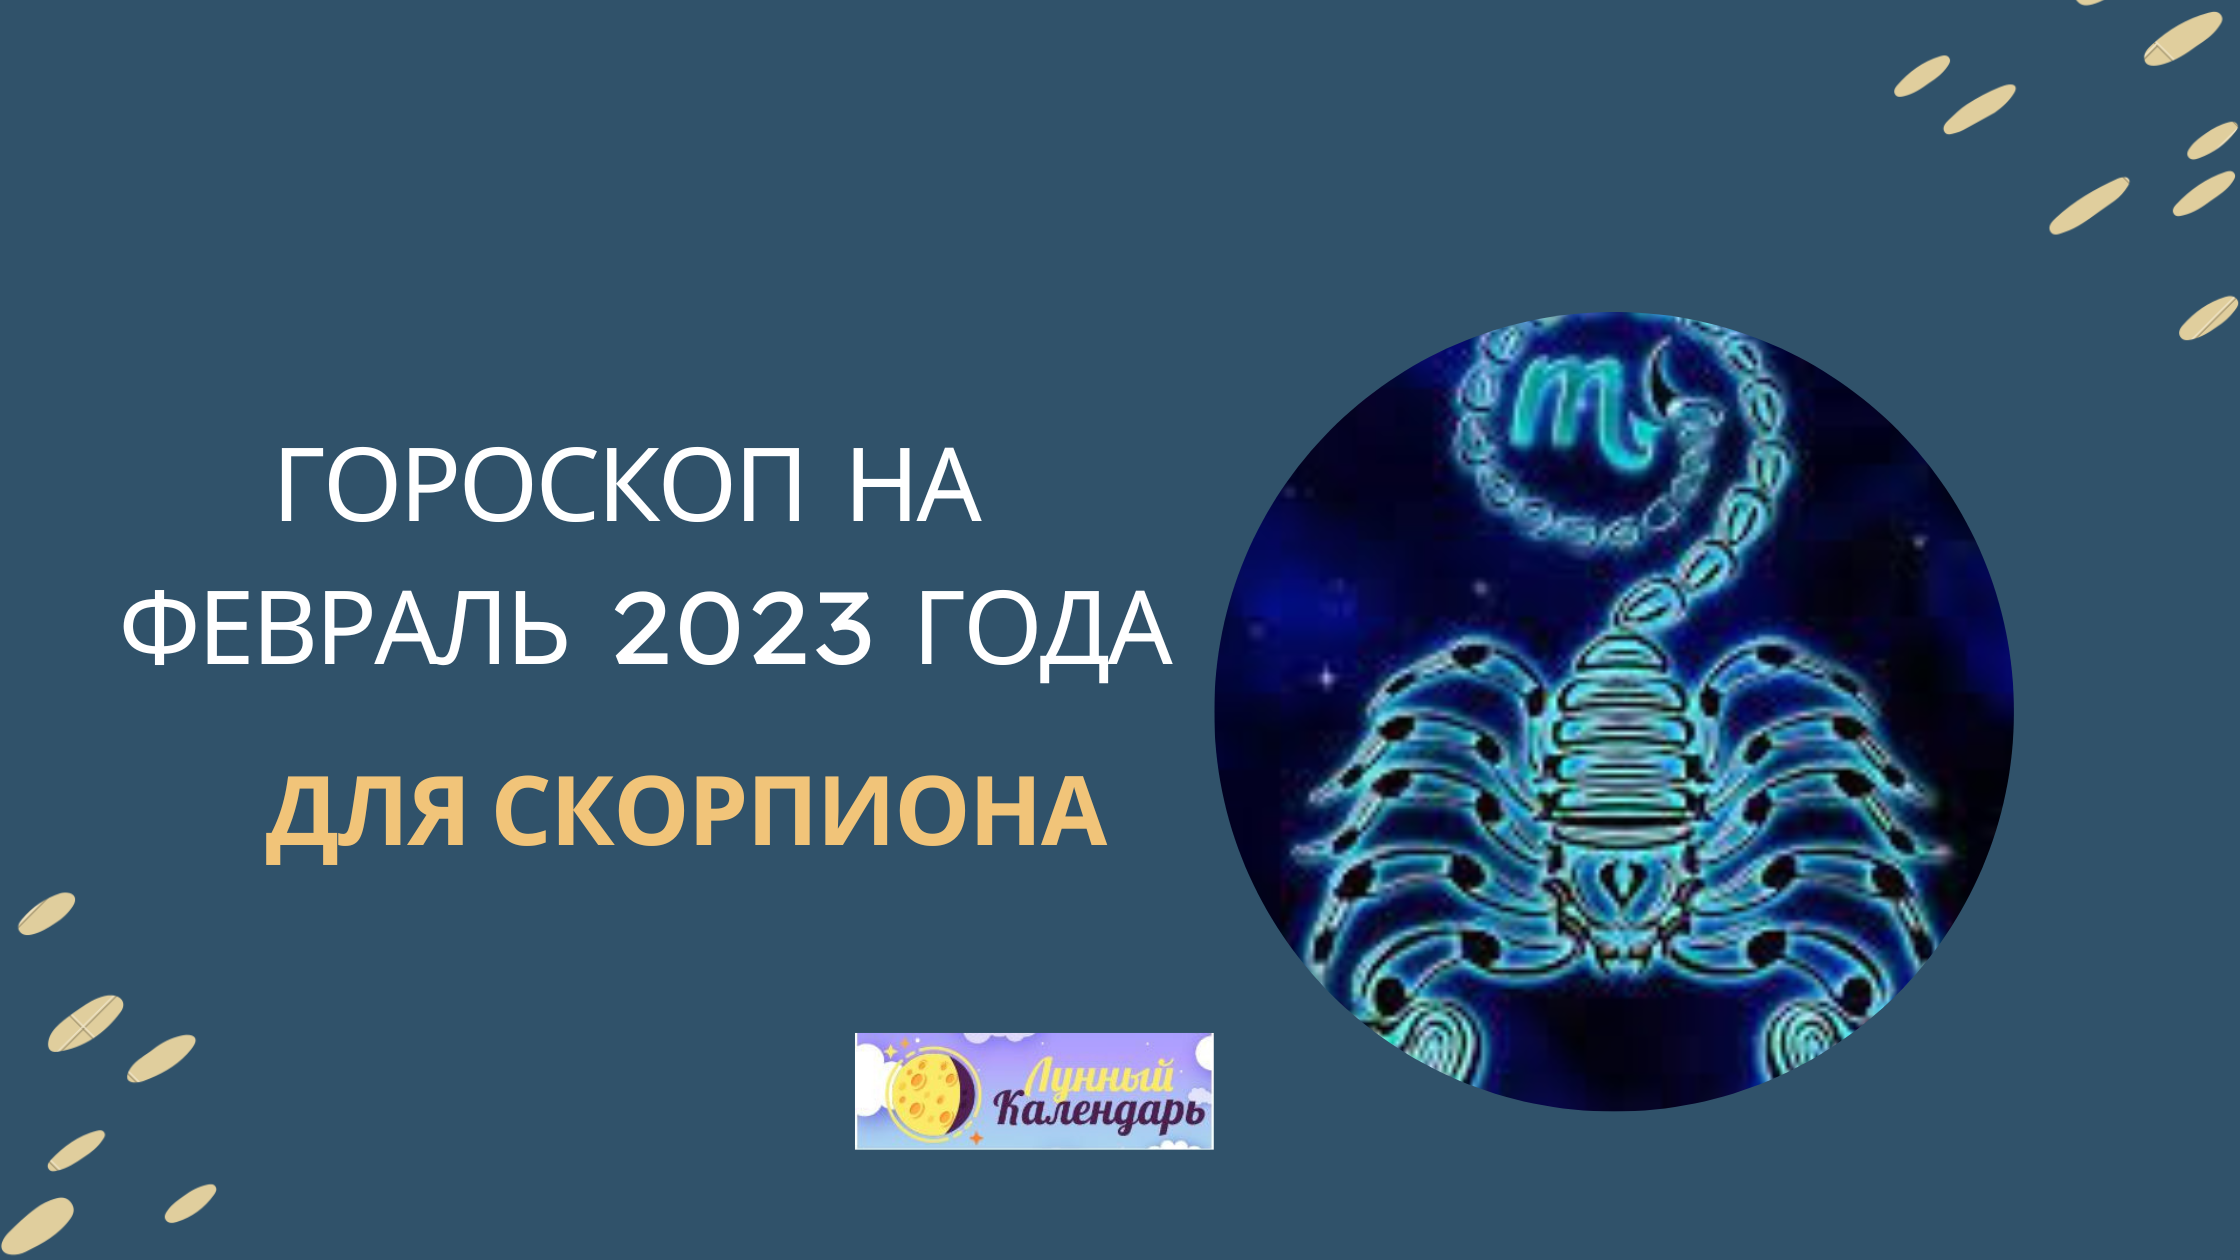 Гороскоп на февраль 2023 Скорпион